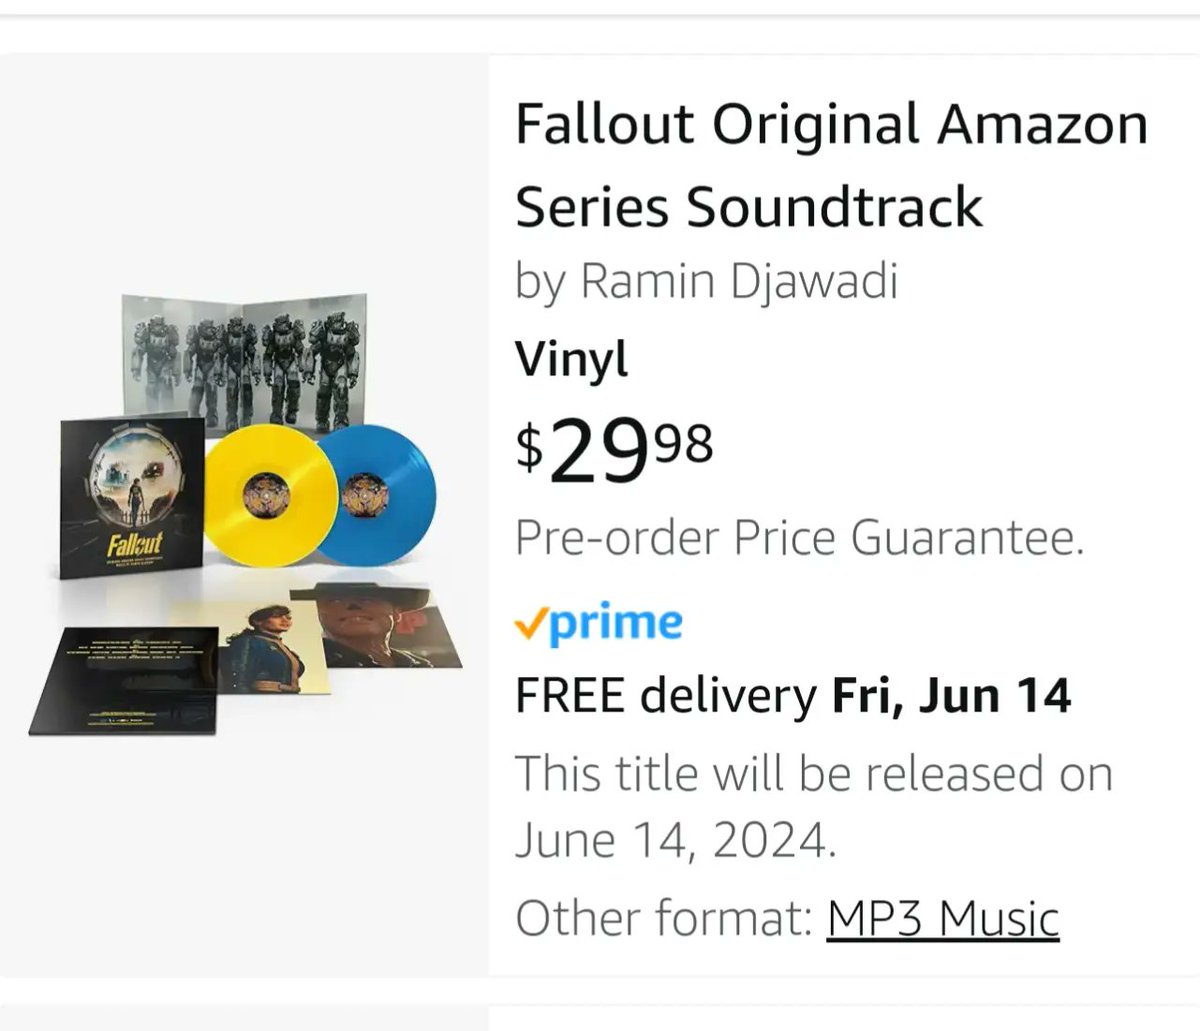 Fallout TV Series original soundtrack is up on Amazon!
 
amzn.to/3UkkMLX

#fallout #falloutonprime #vinyl #vinylrecord